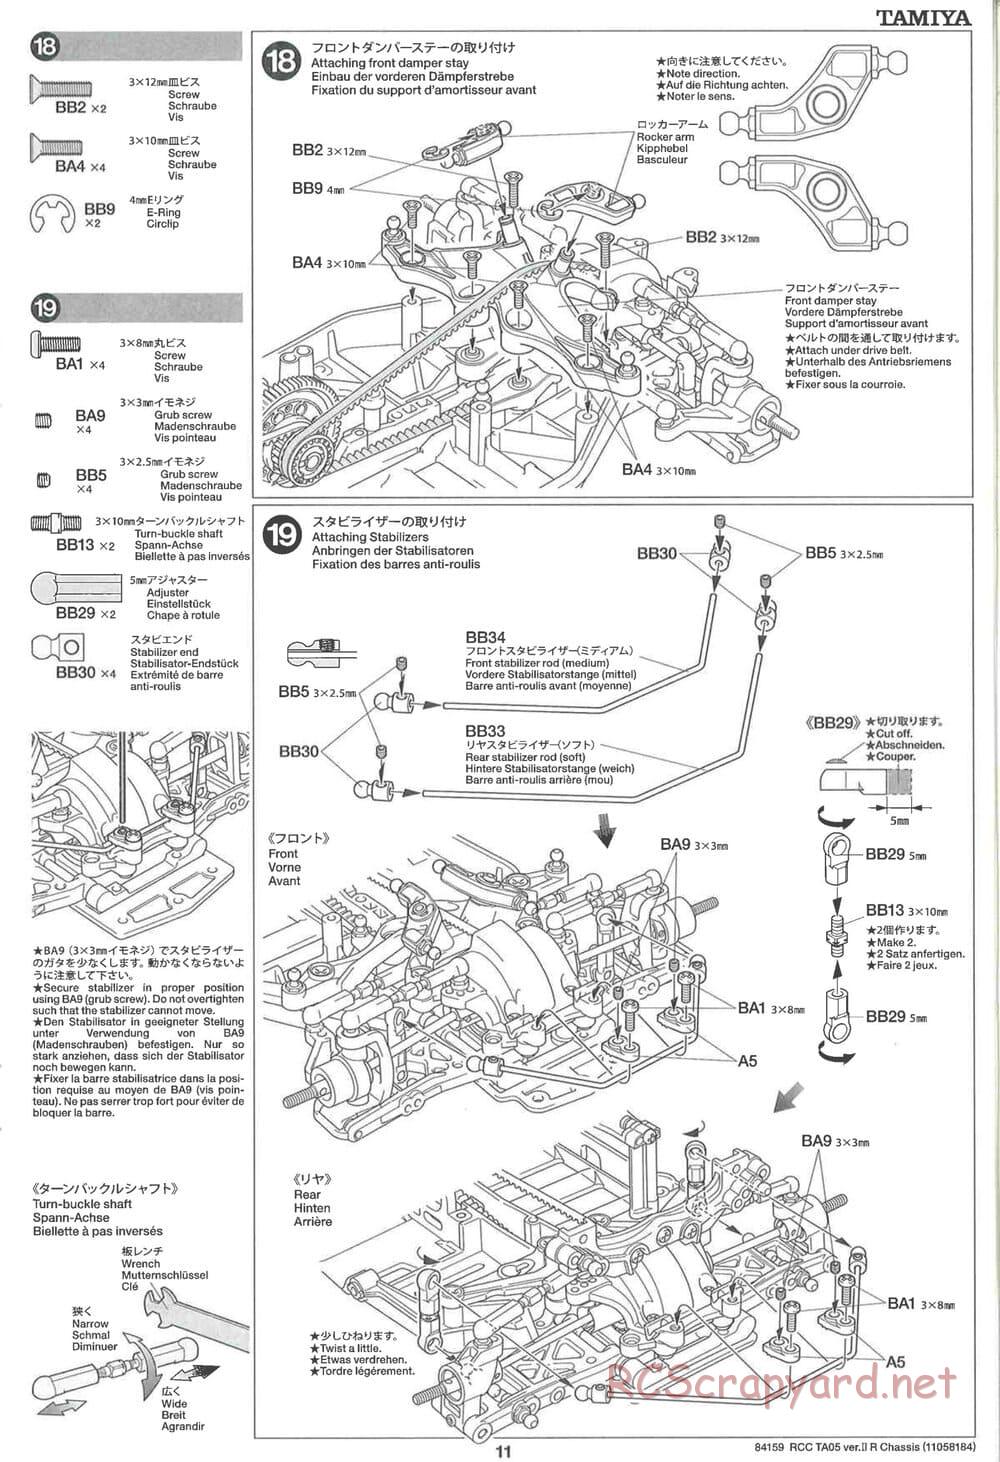 Tamiya - TA05 Ver.II R Chassis - Manual - Page 11